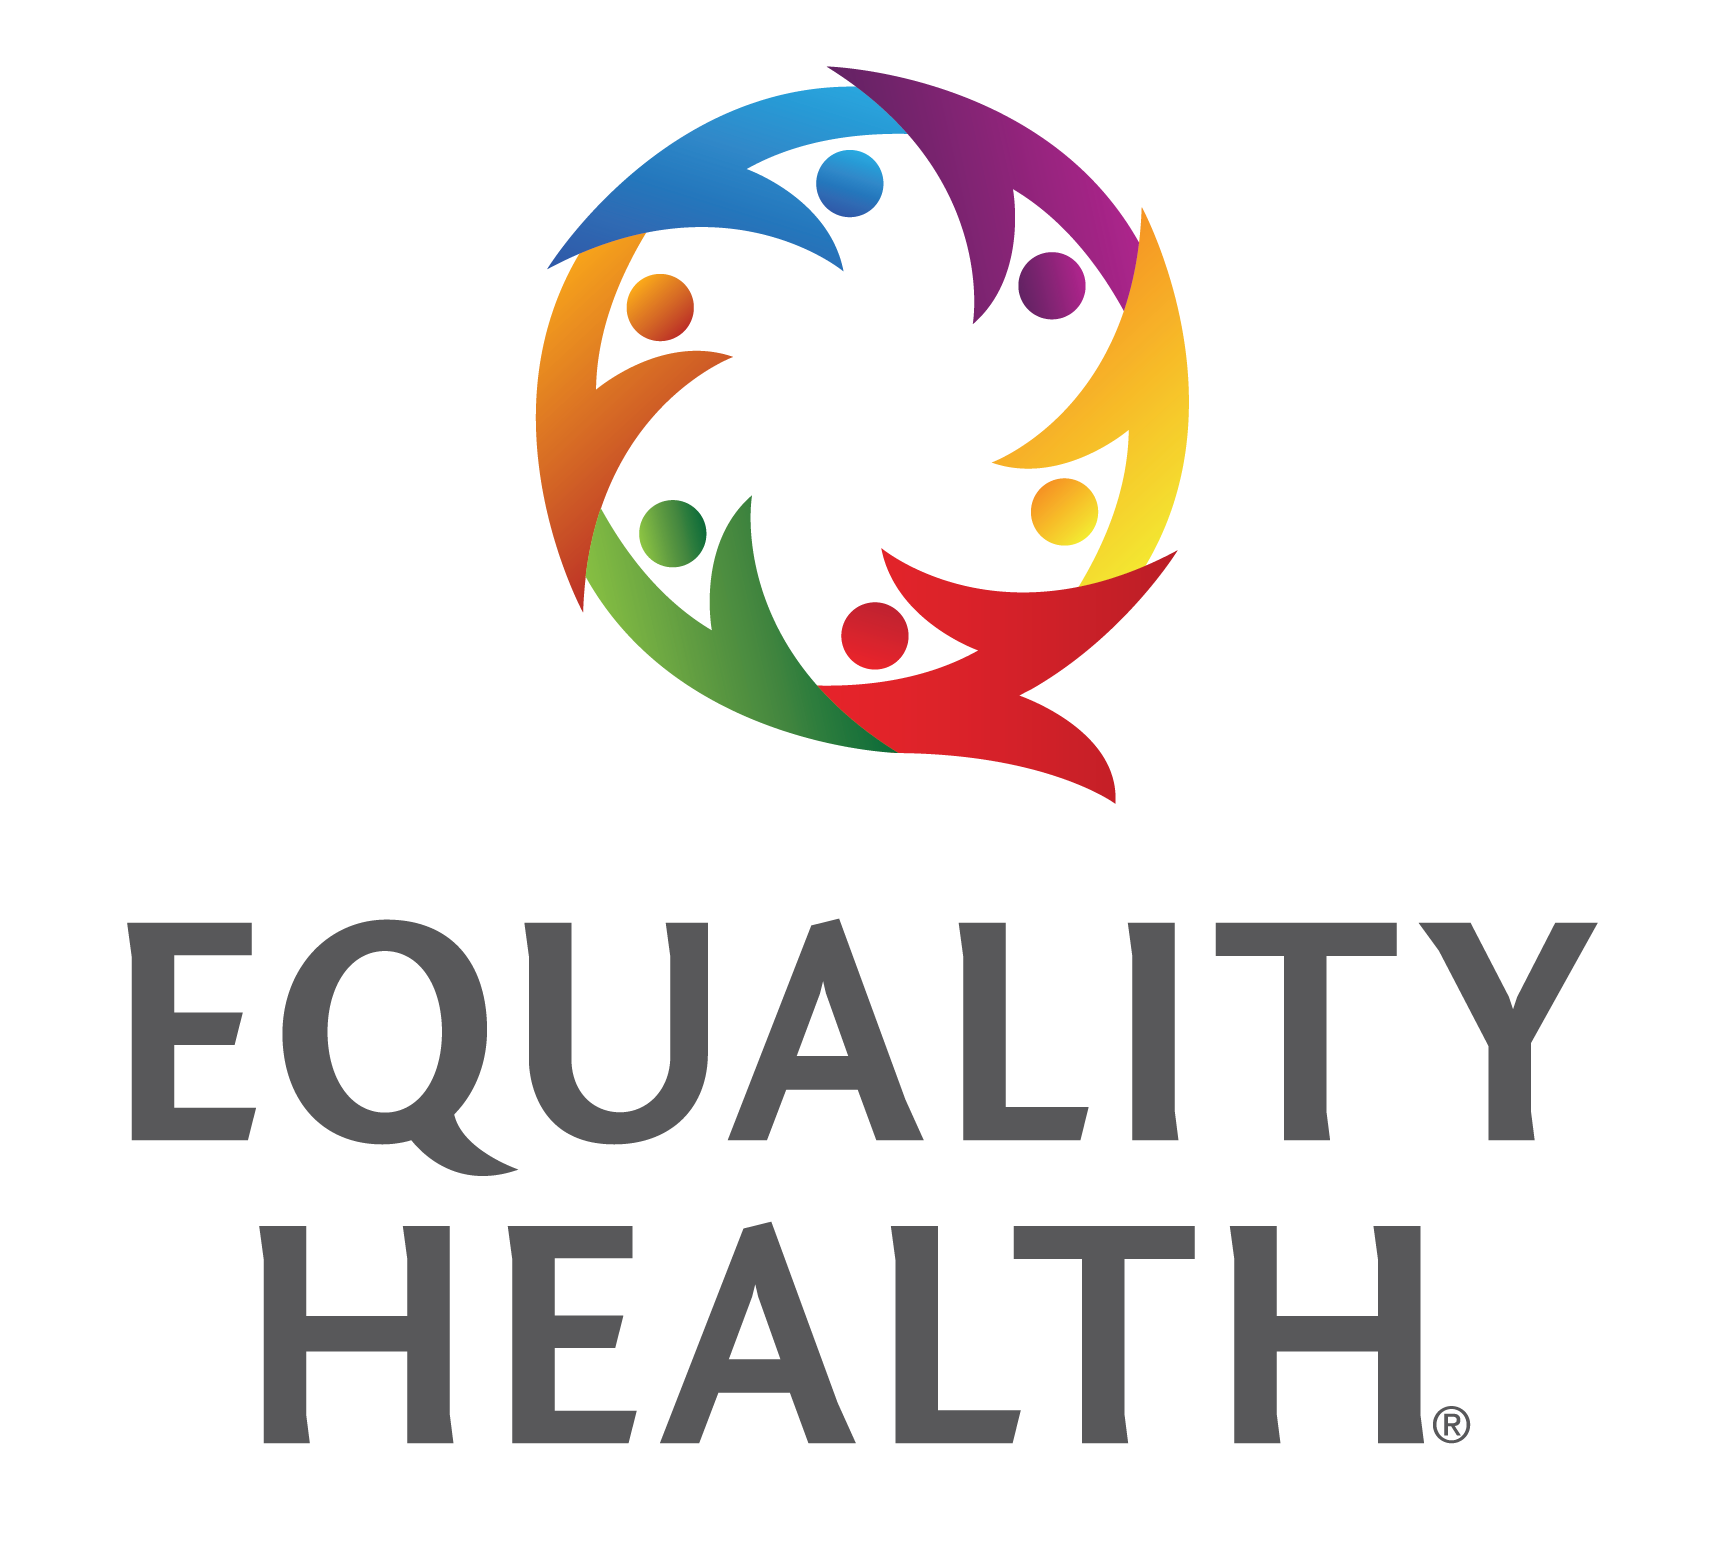 Equality Health